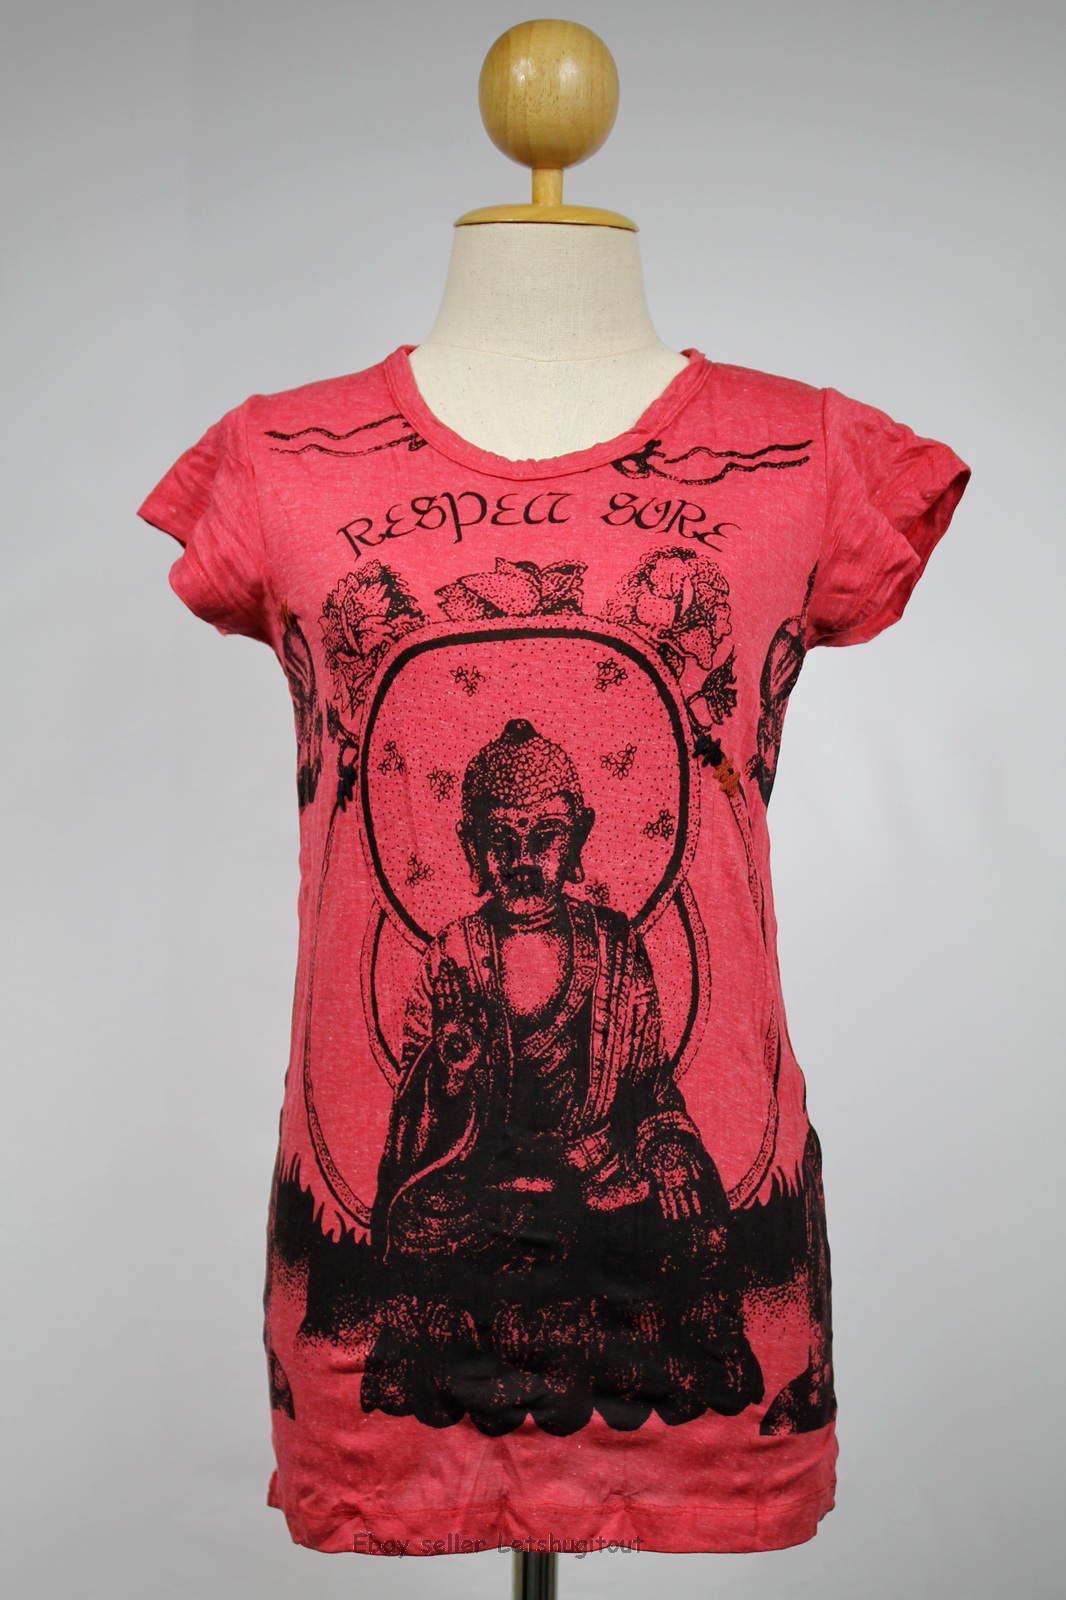 Buddha T-shirt Crinkle Cotton Yoga Outfit Hindu God Red S M L Xl